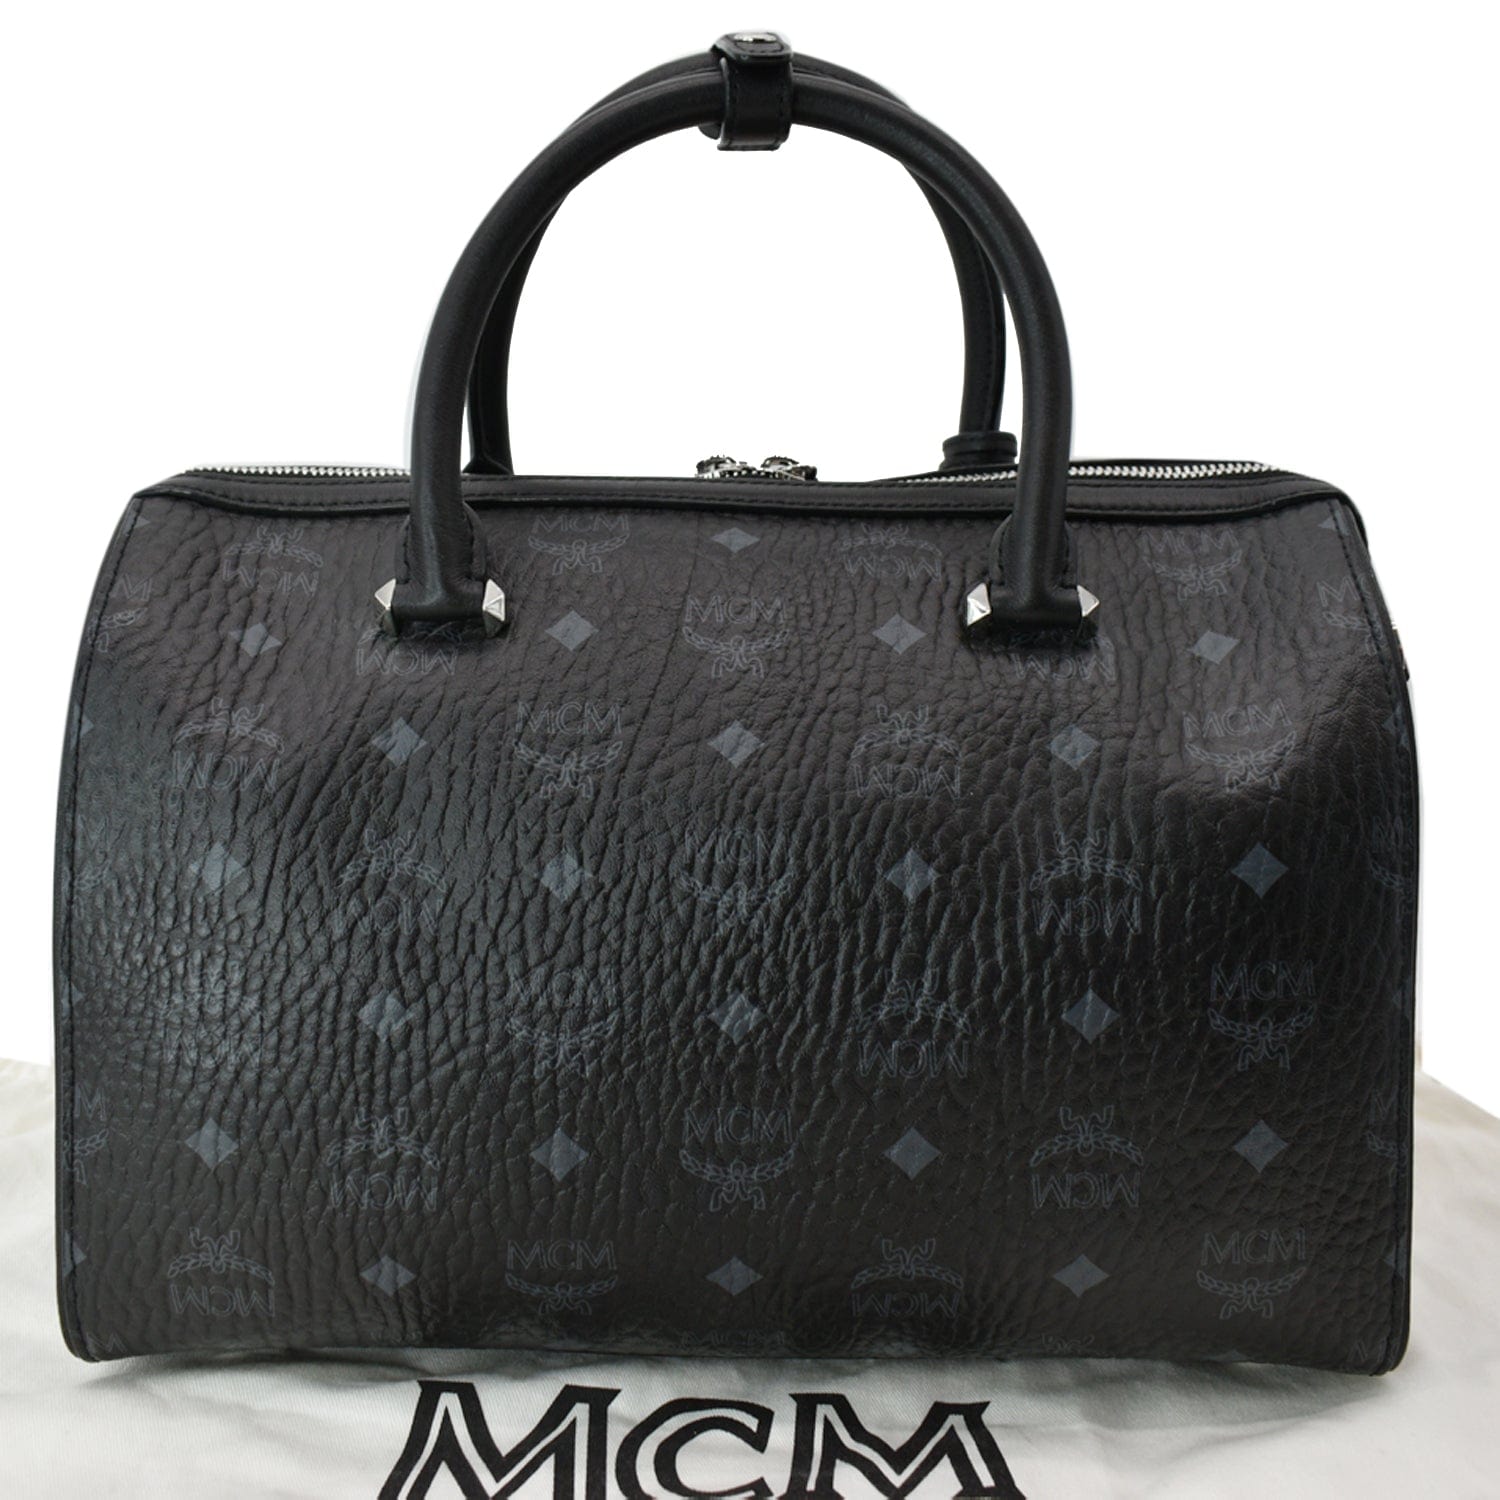 price mcm boston bag black